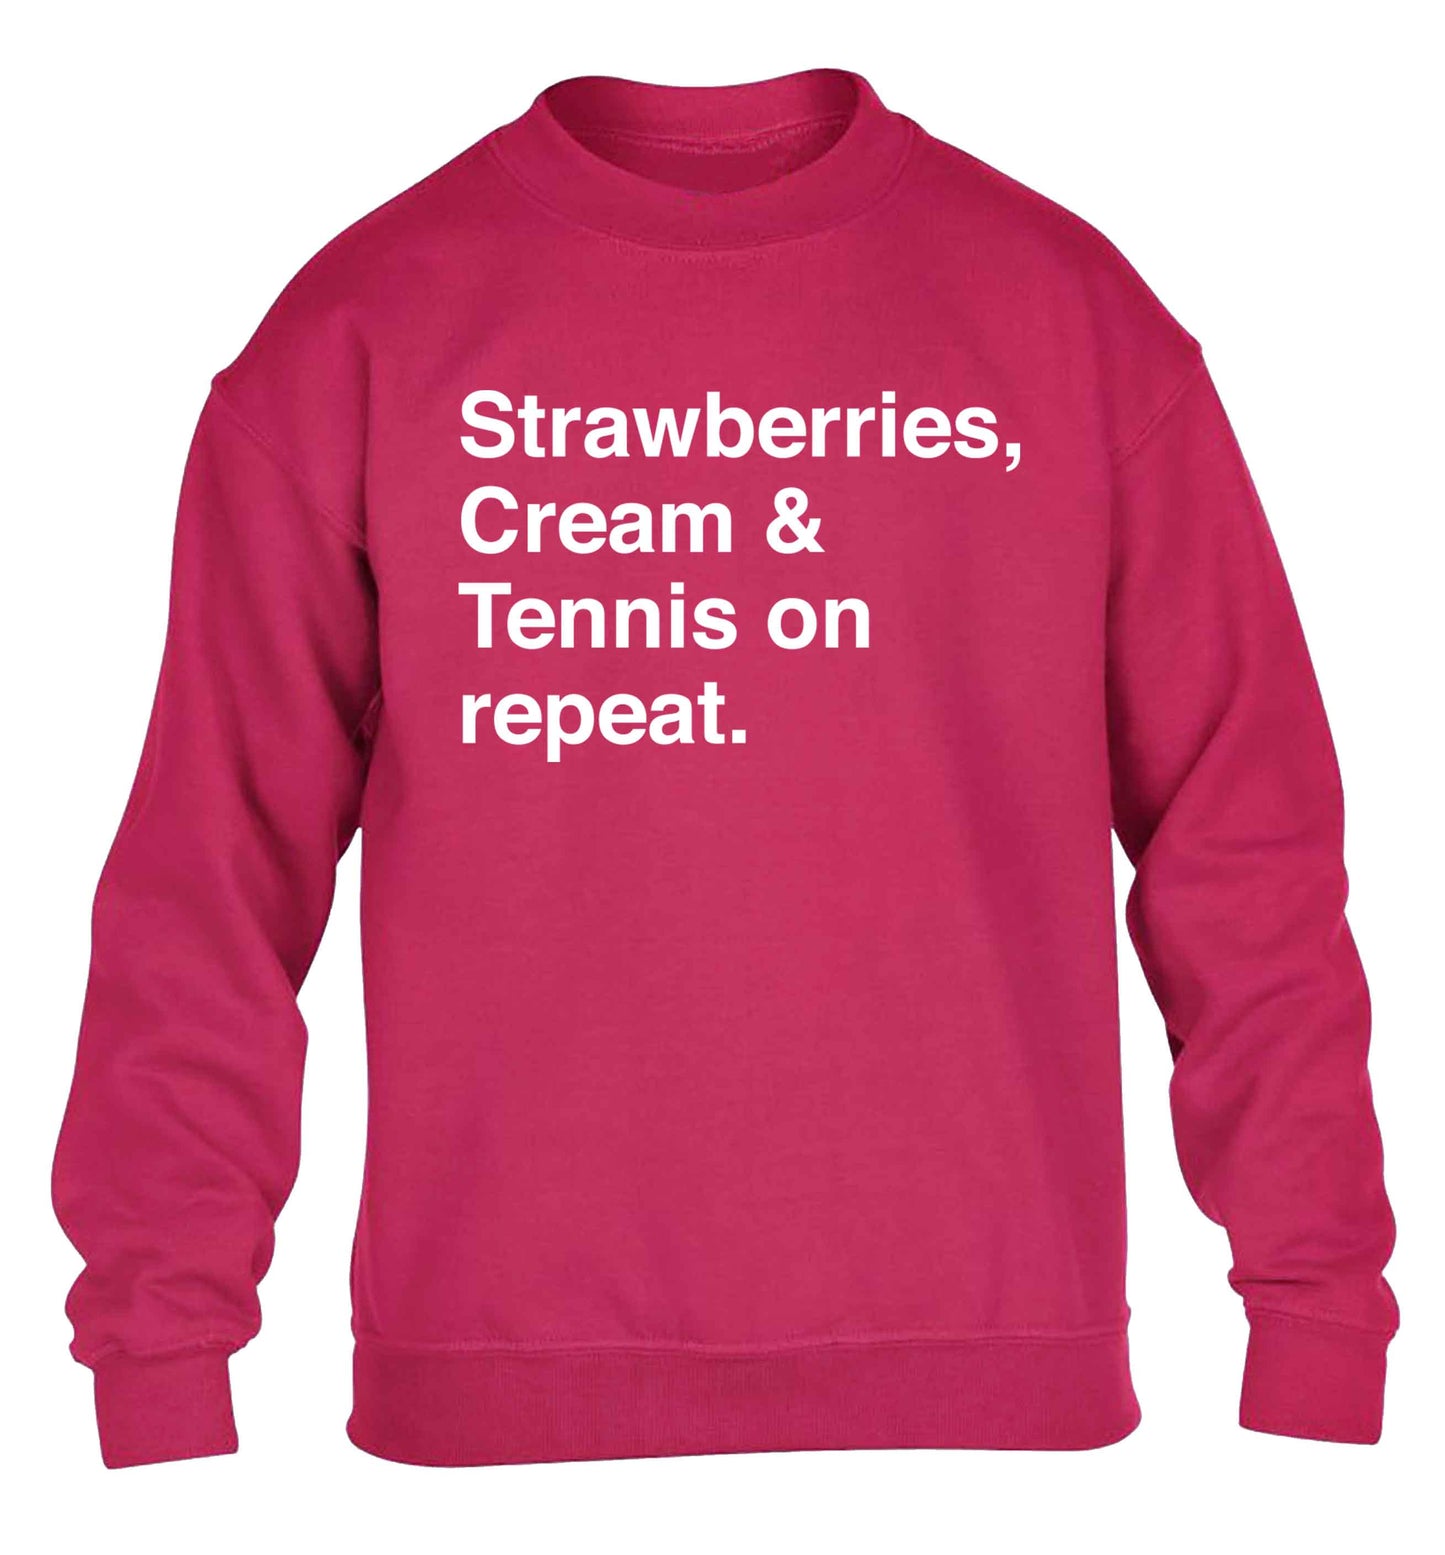 Strawberries, cream and tennis on repeat children's pink sweater 12-13 Years